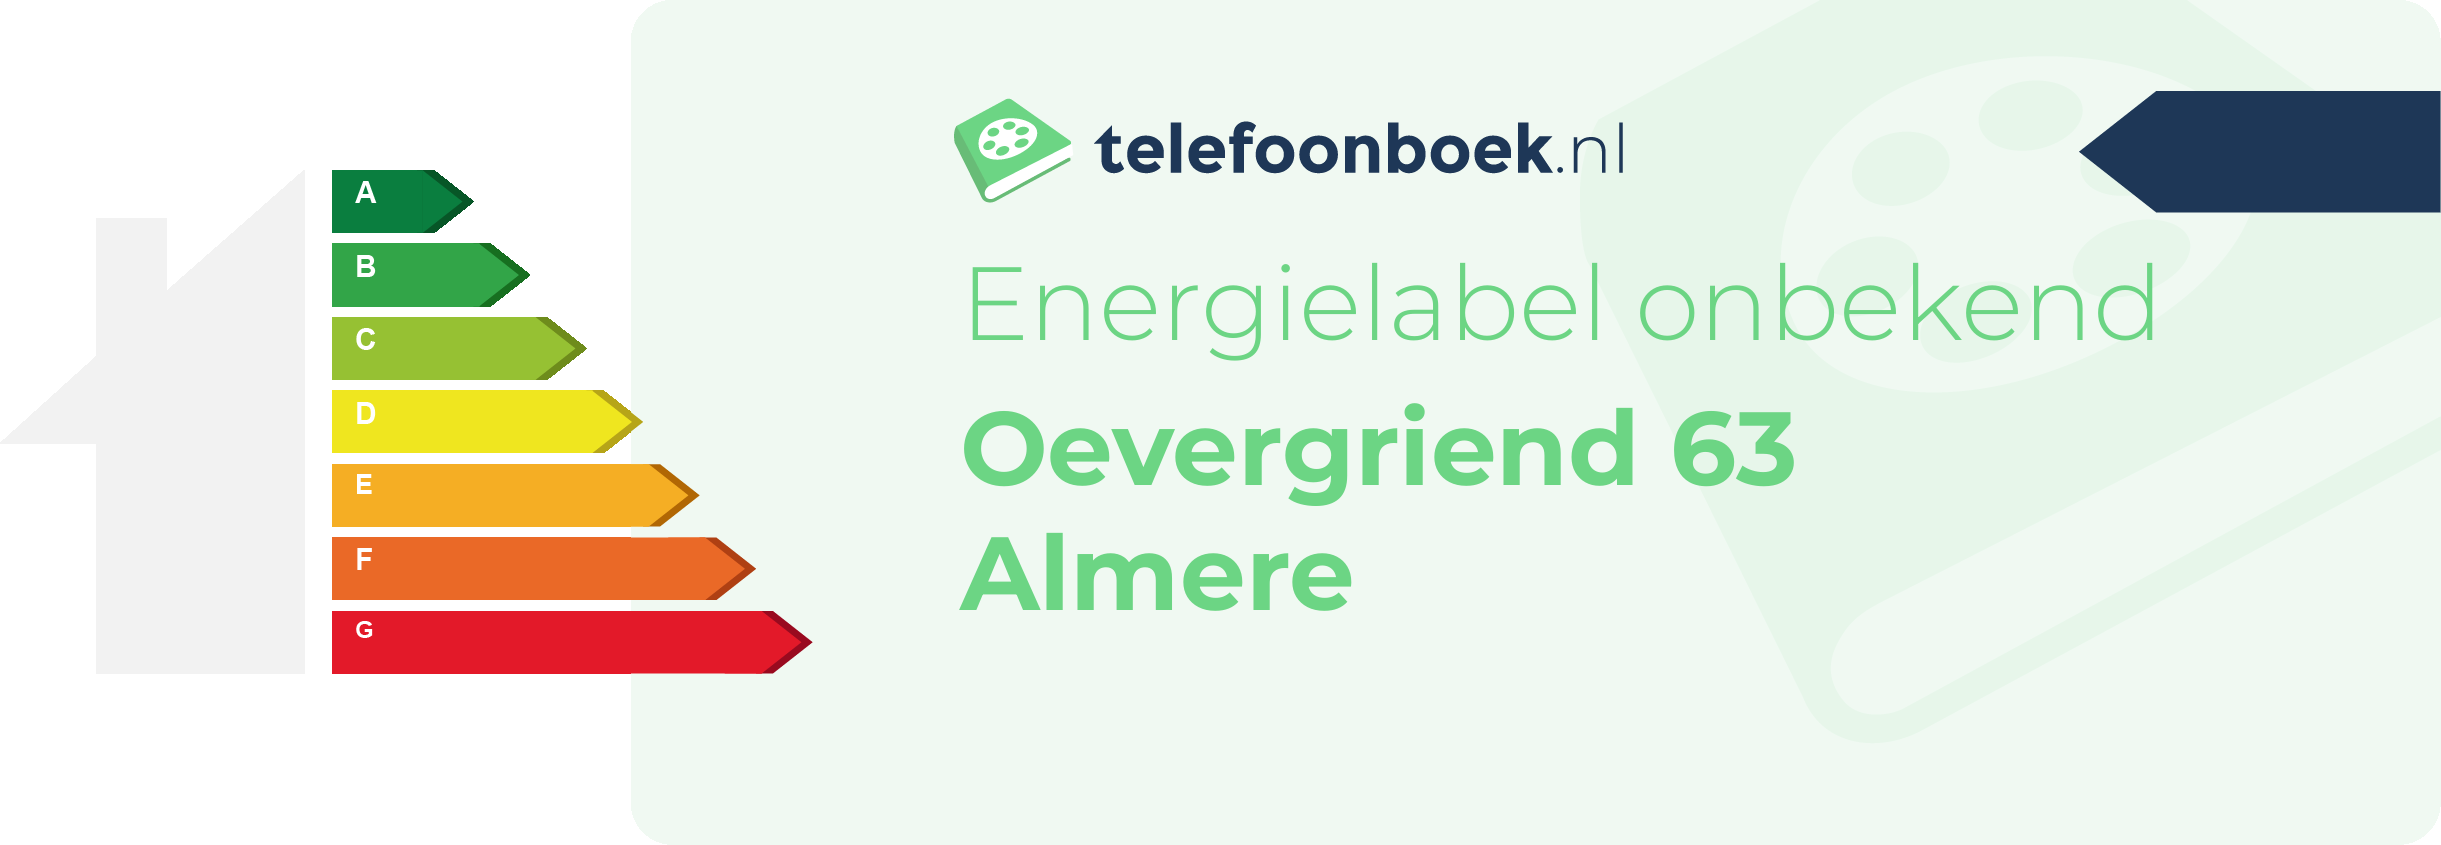 Energielabel Oevergriend 63 Almere